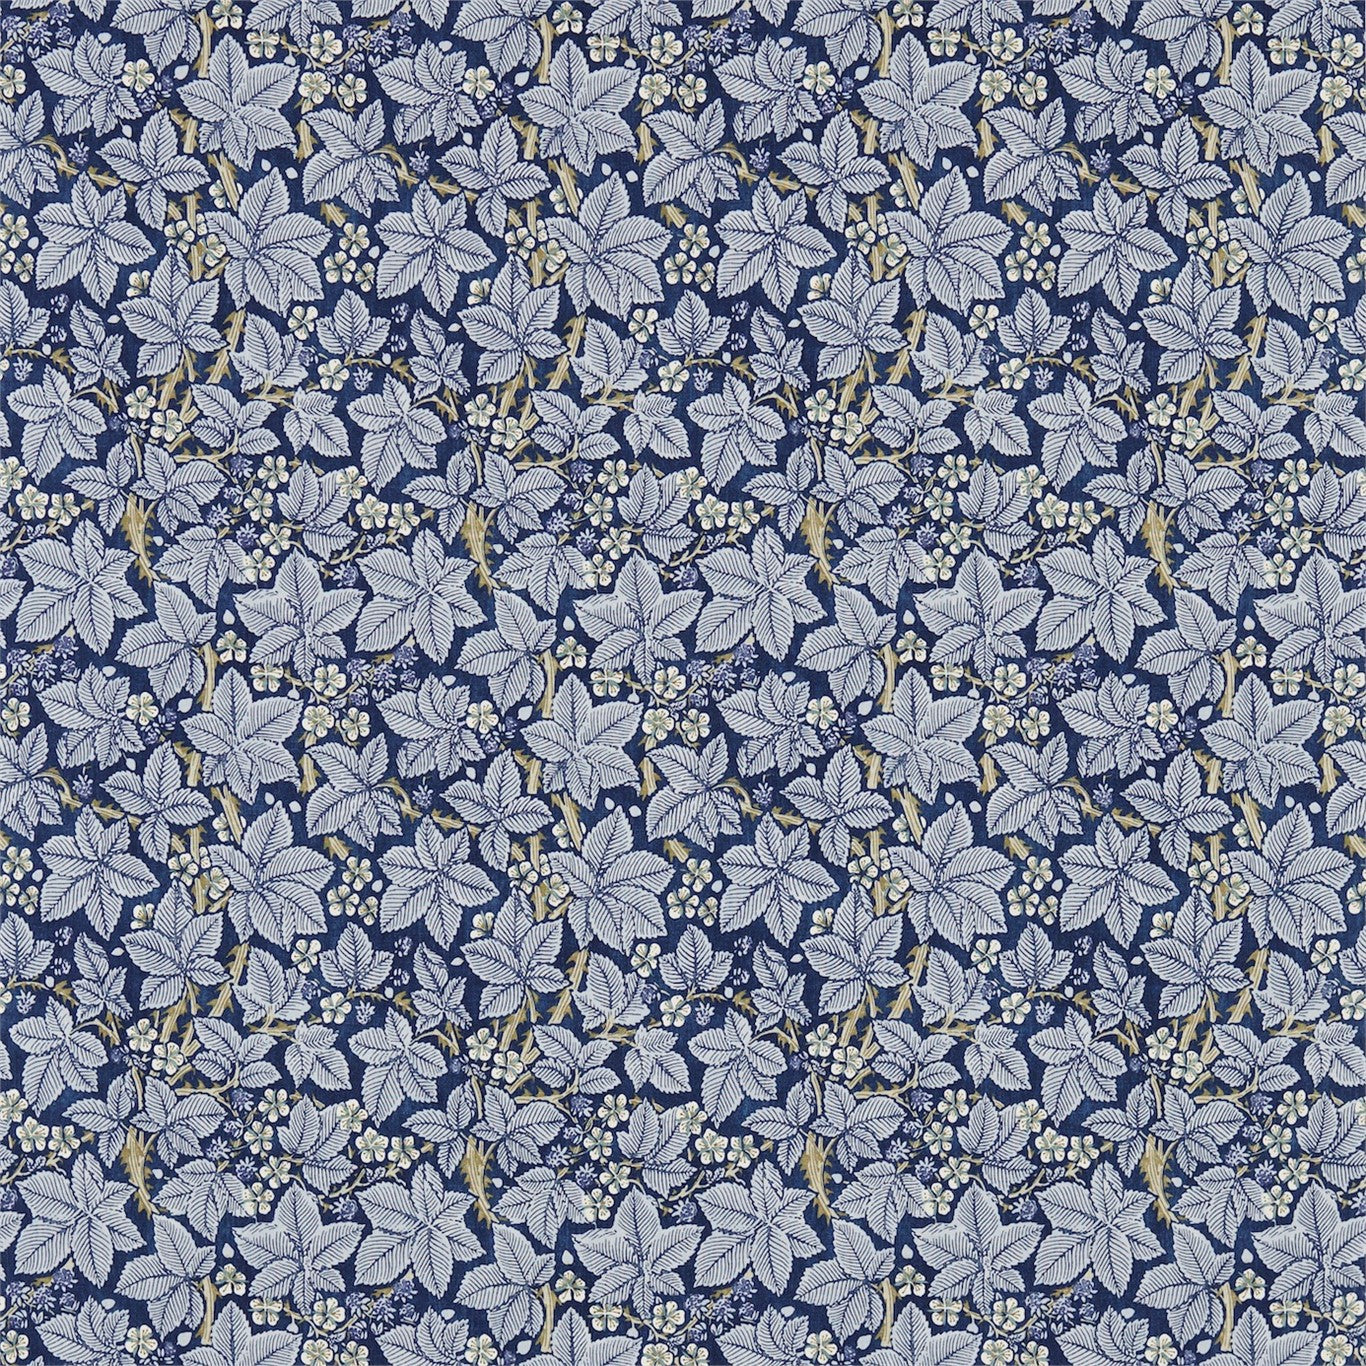 Bramble Fabric by Morris & Co. - DMCR226443 - Indigo/Mineral